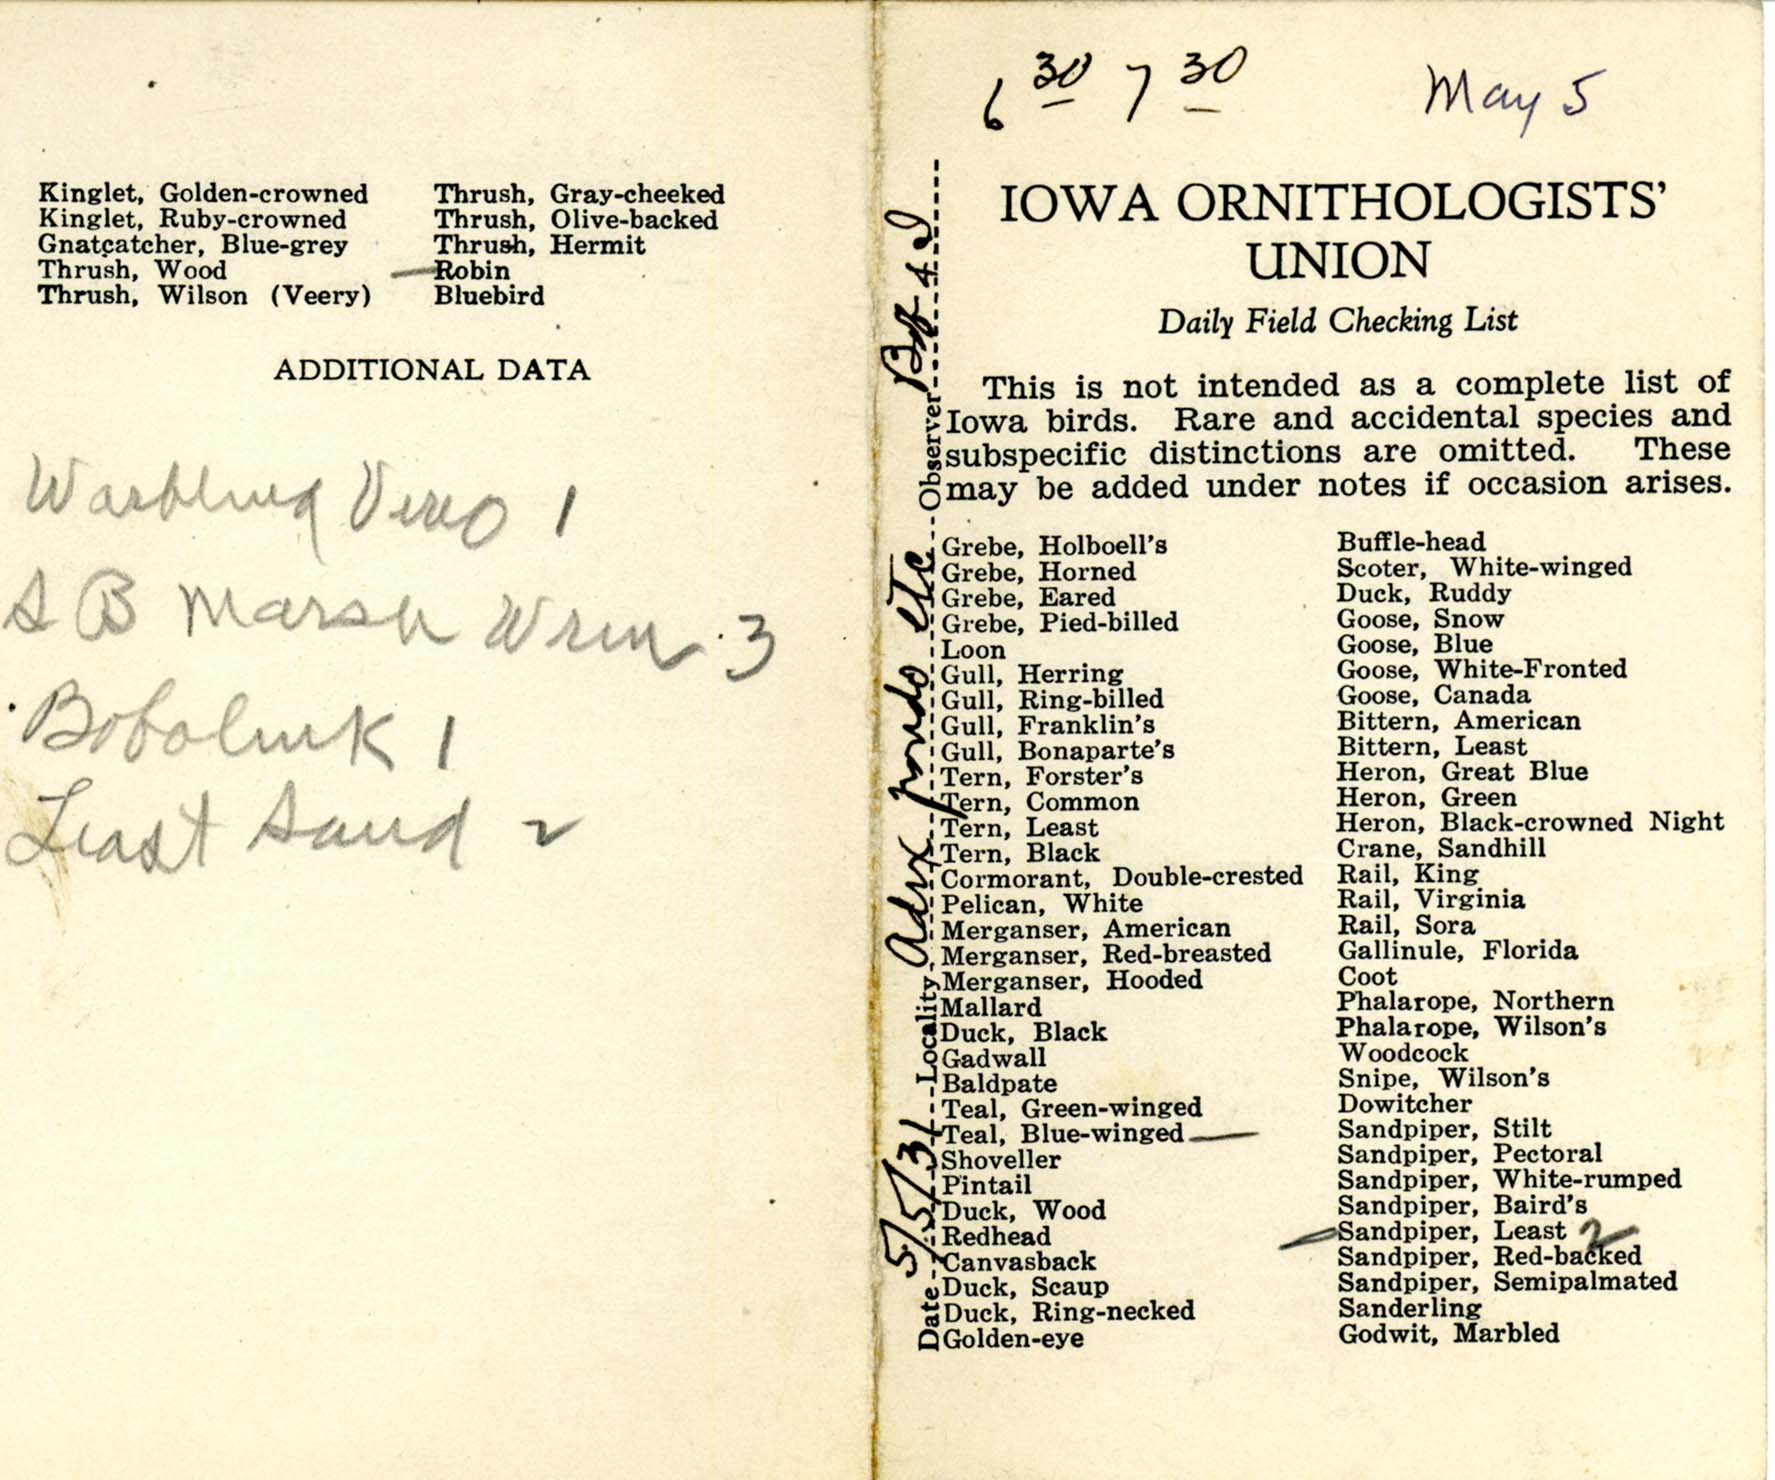 Daily field checking list, Walter Rosene, May 5, 1931